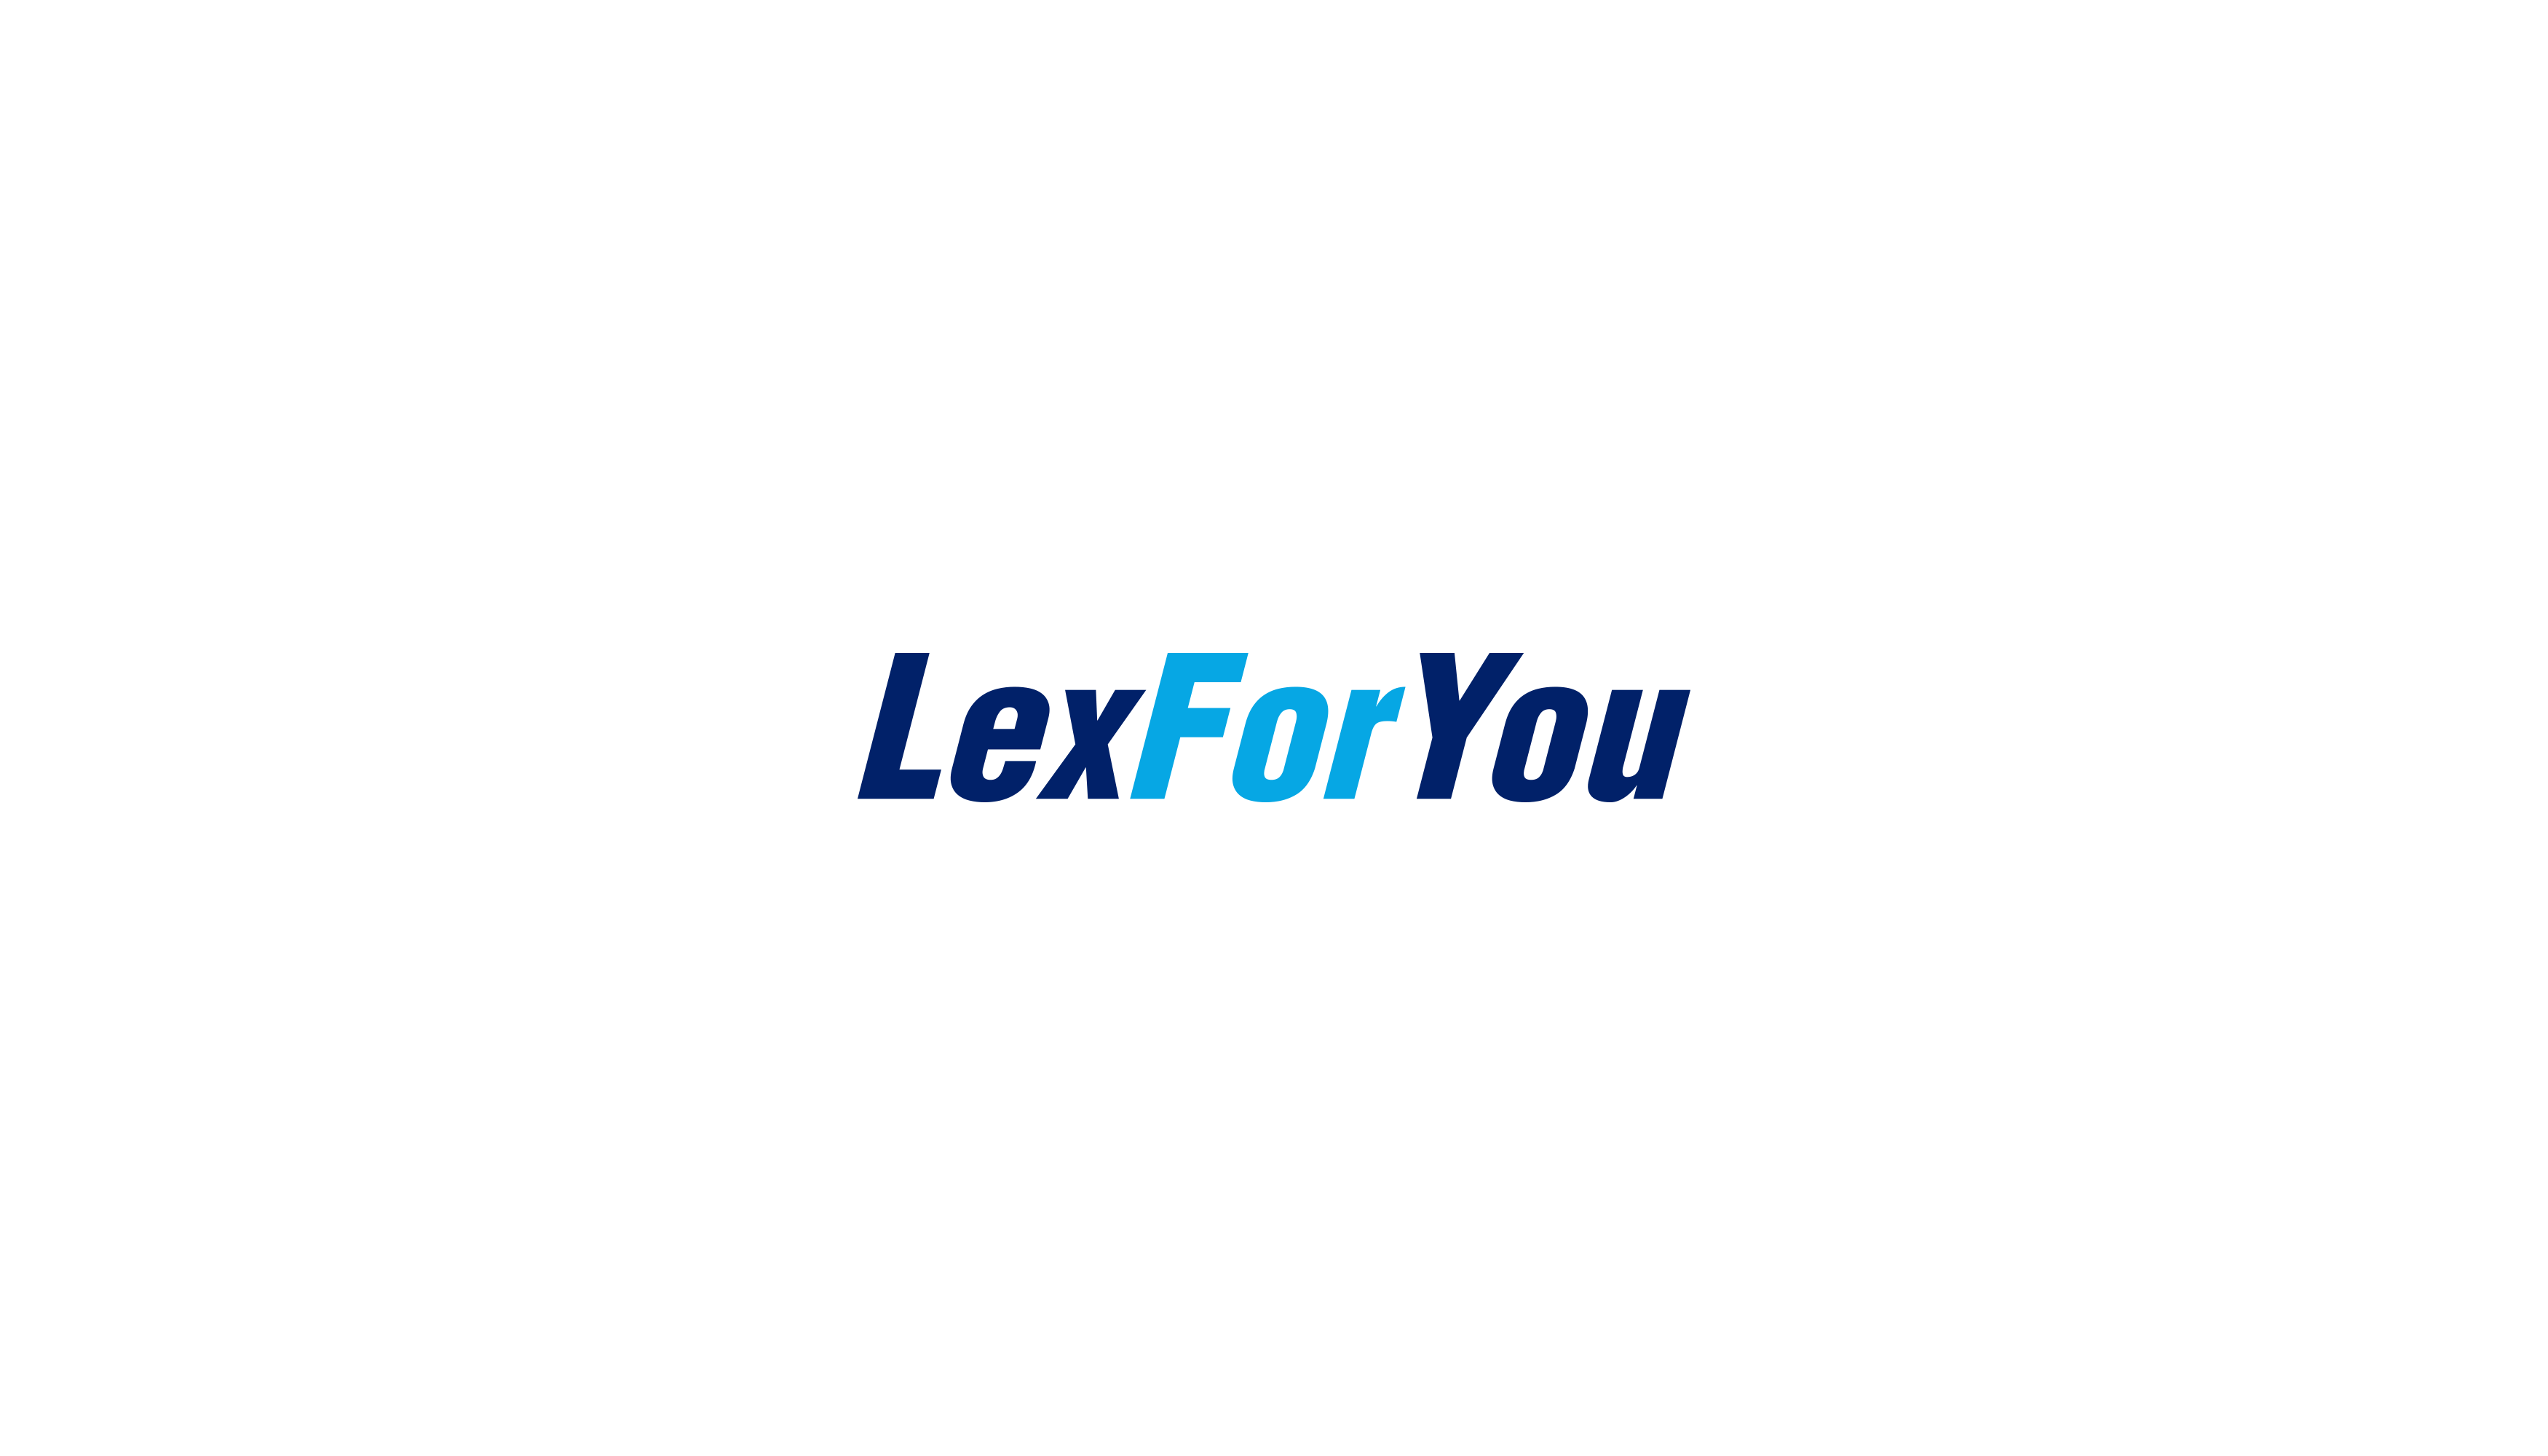 LexForYou Design #6